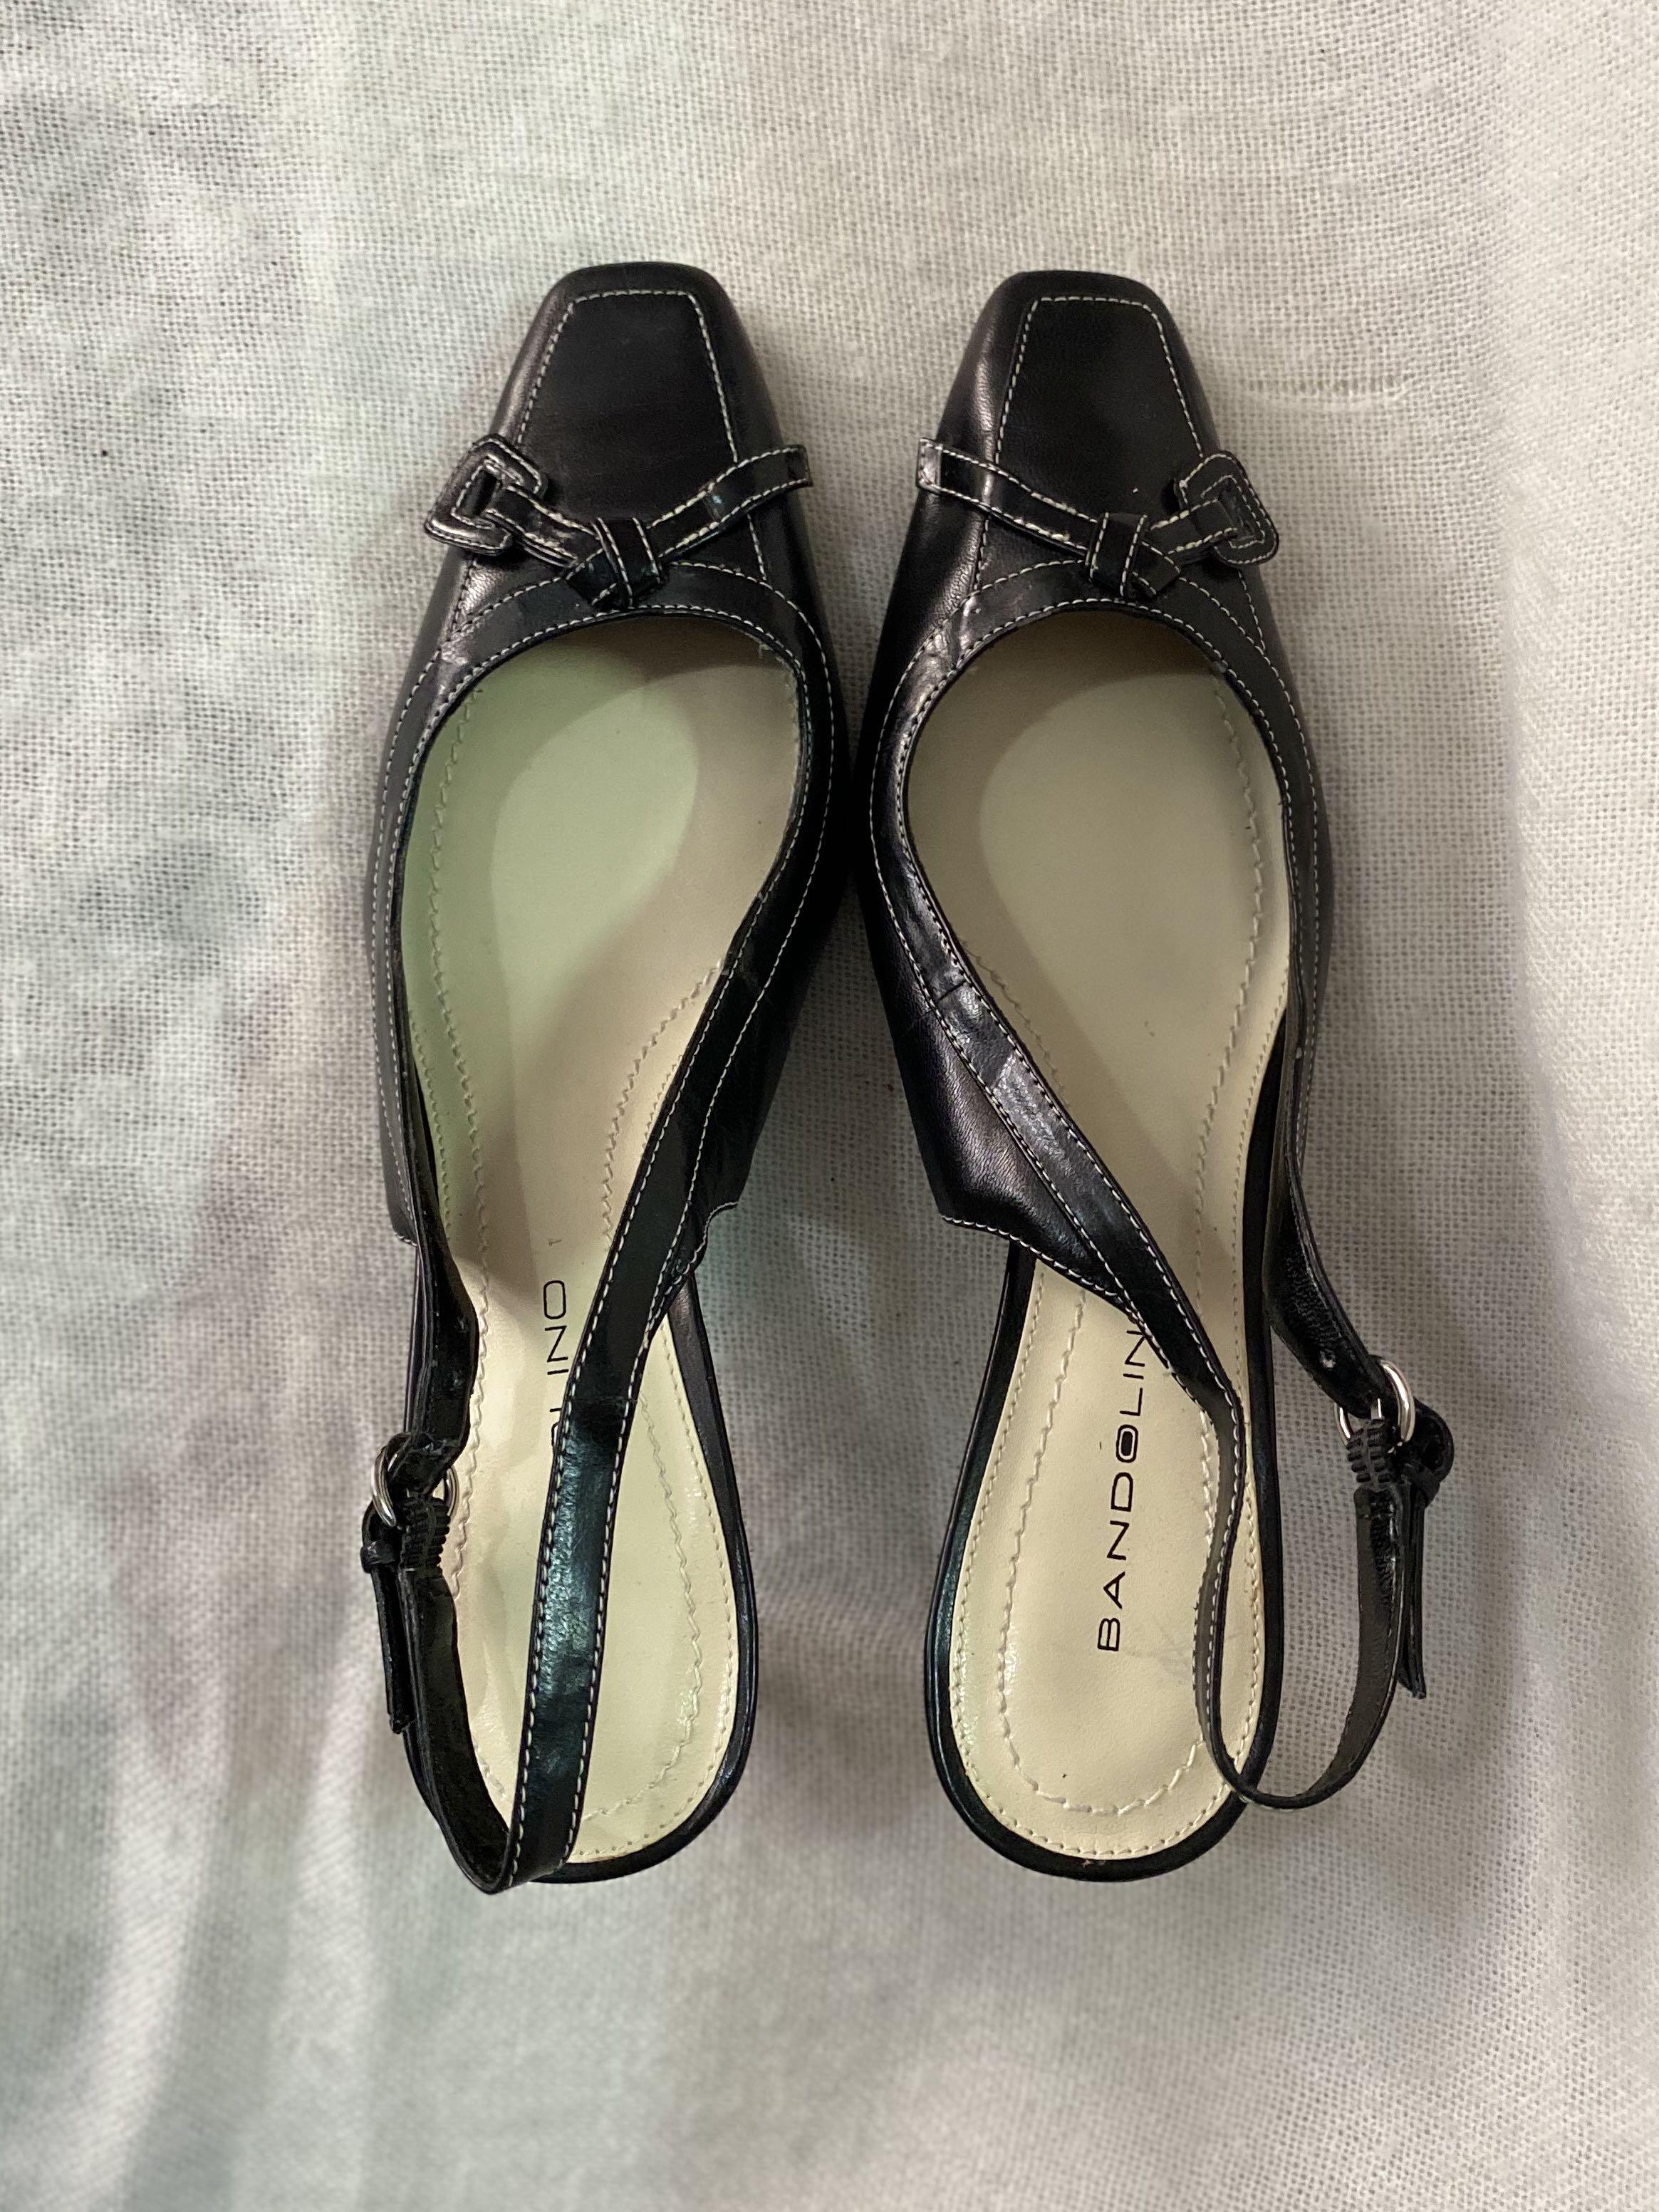 New! Bandolino Black Heels, Women's 